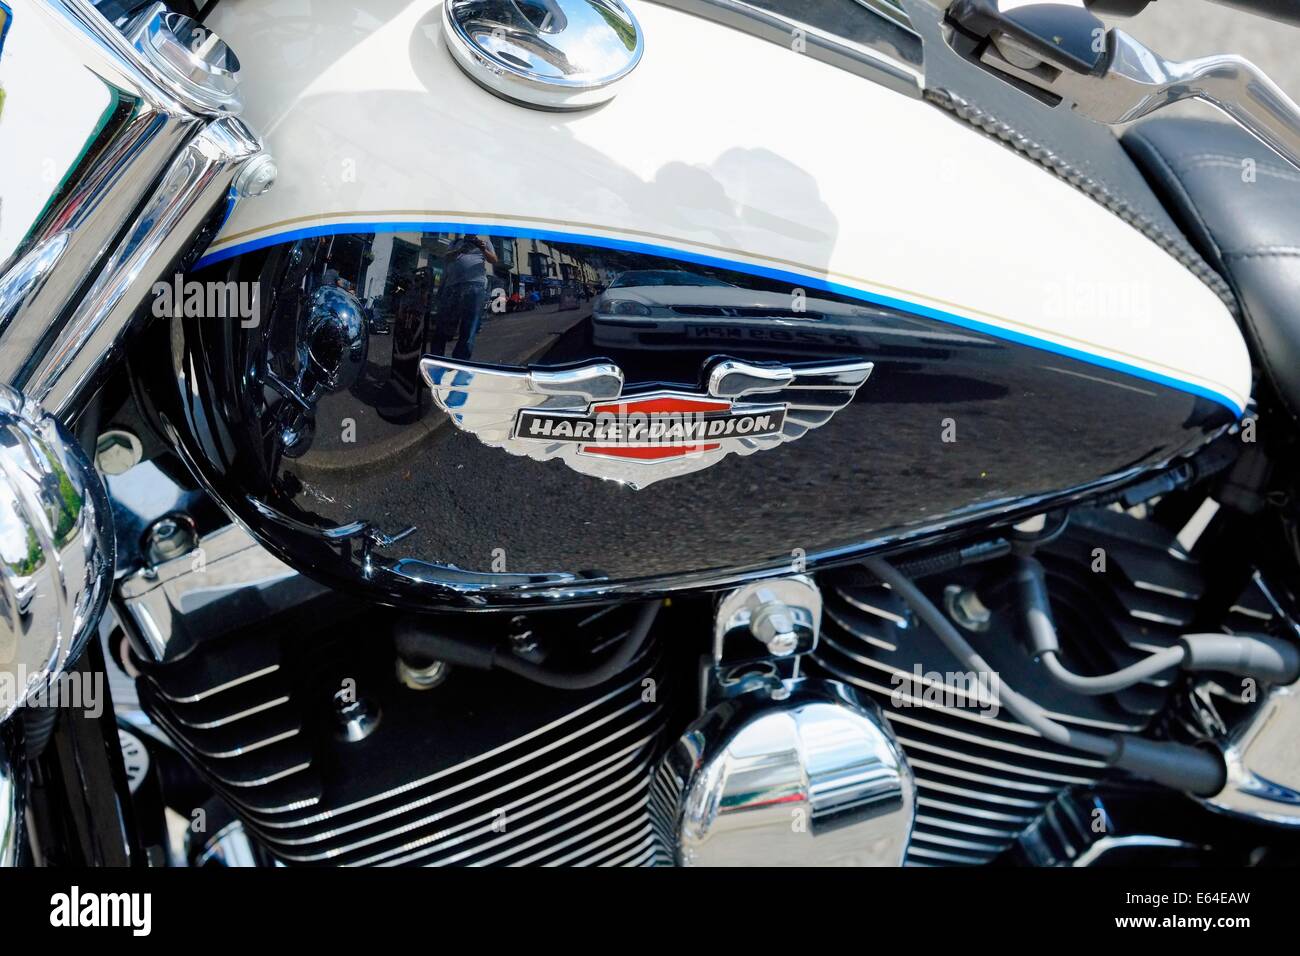 Harley Davidson motorbike uk Stock Photo